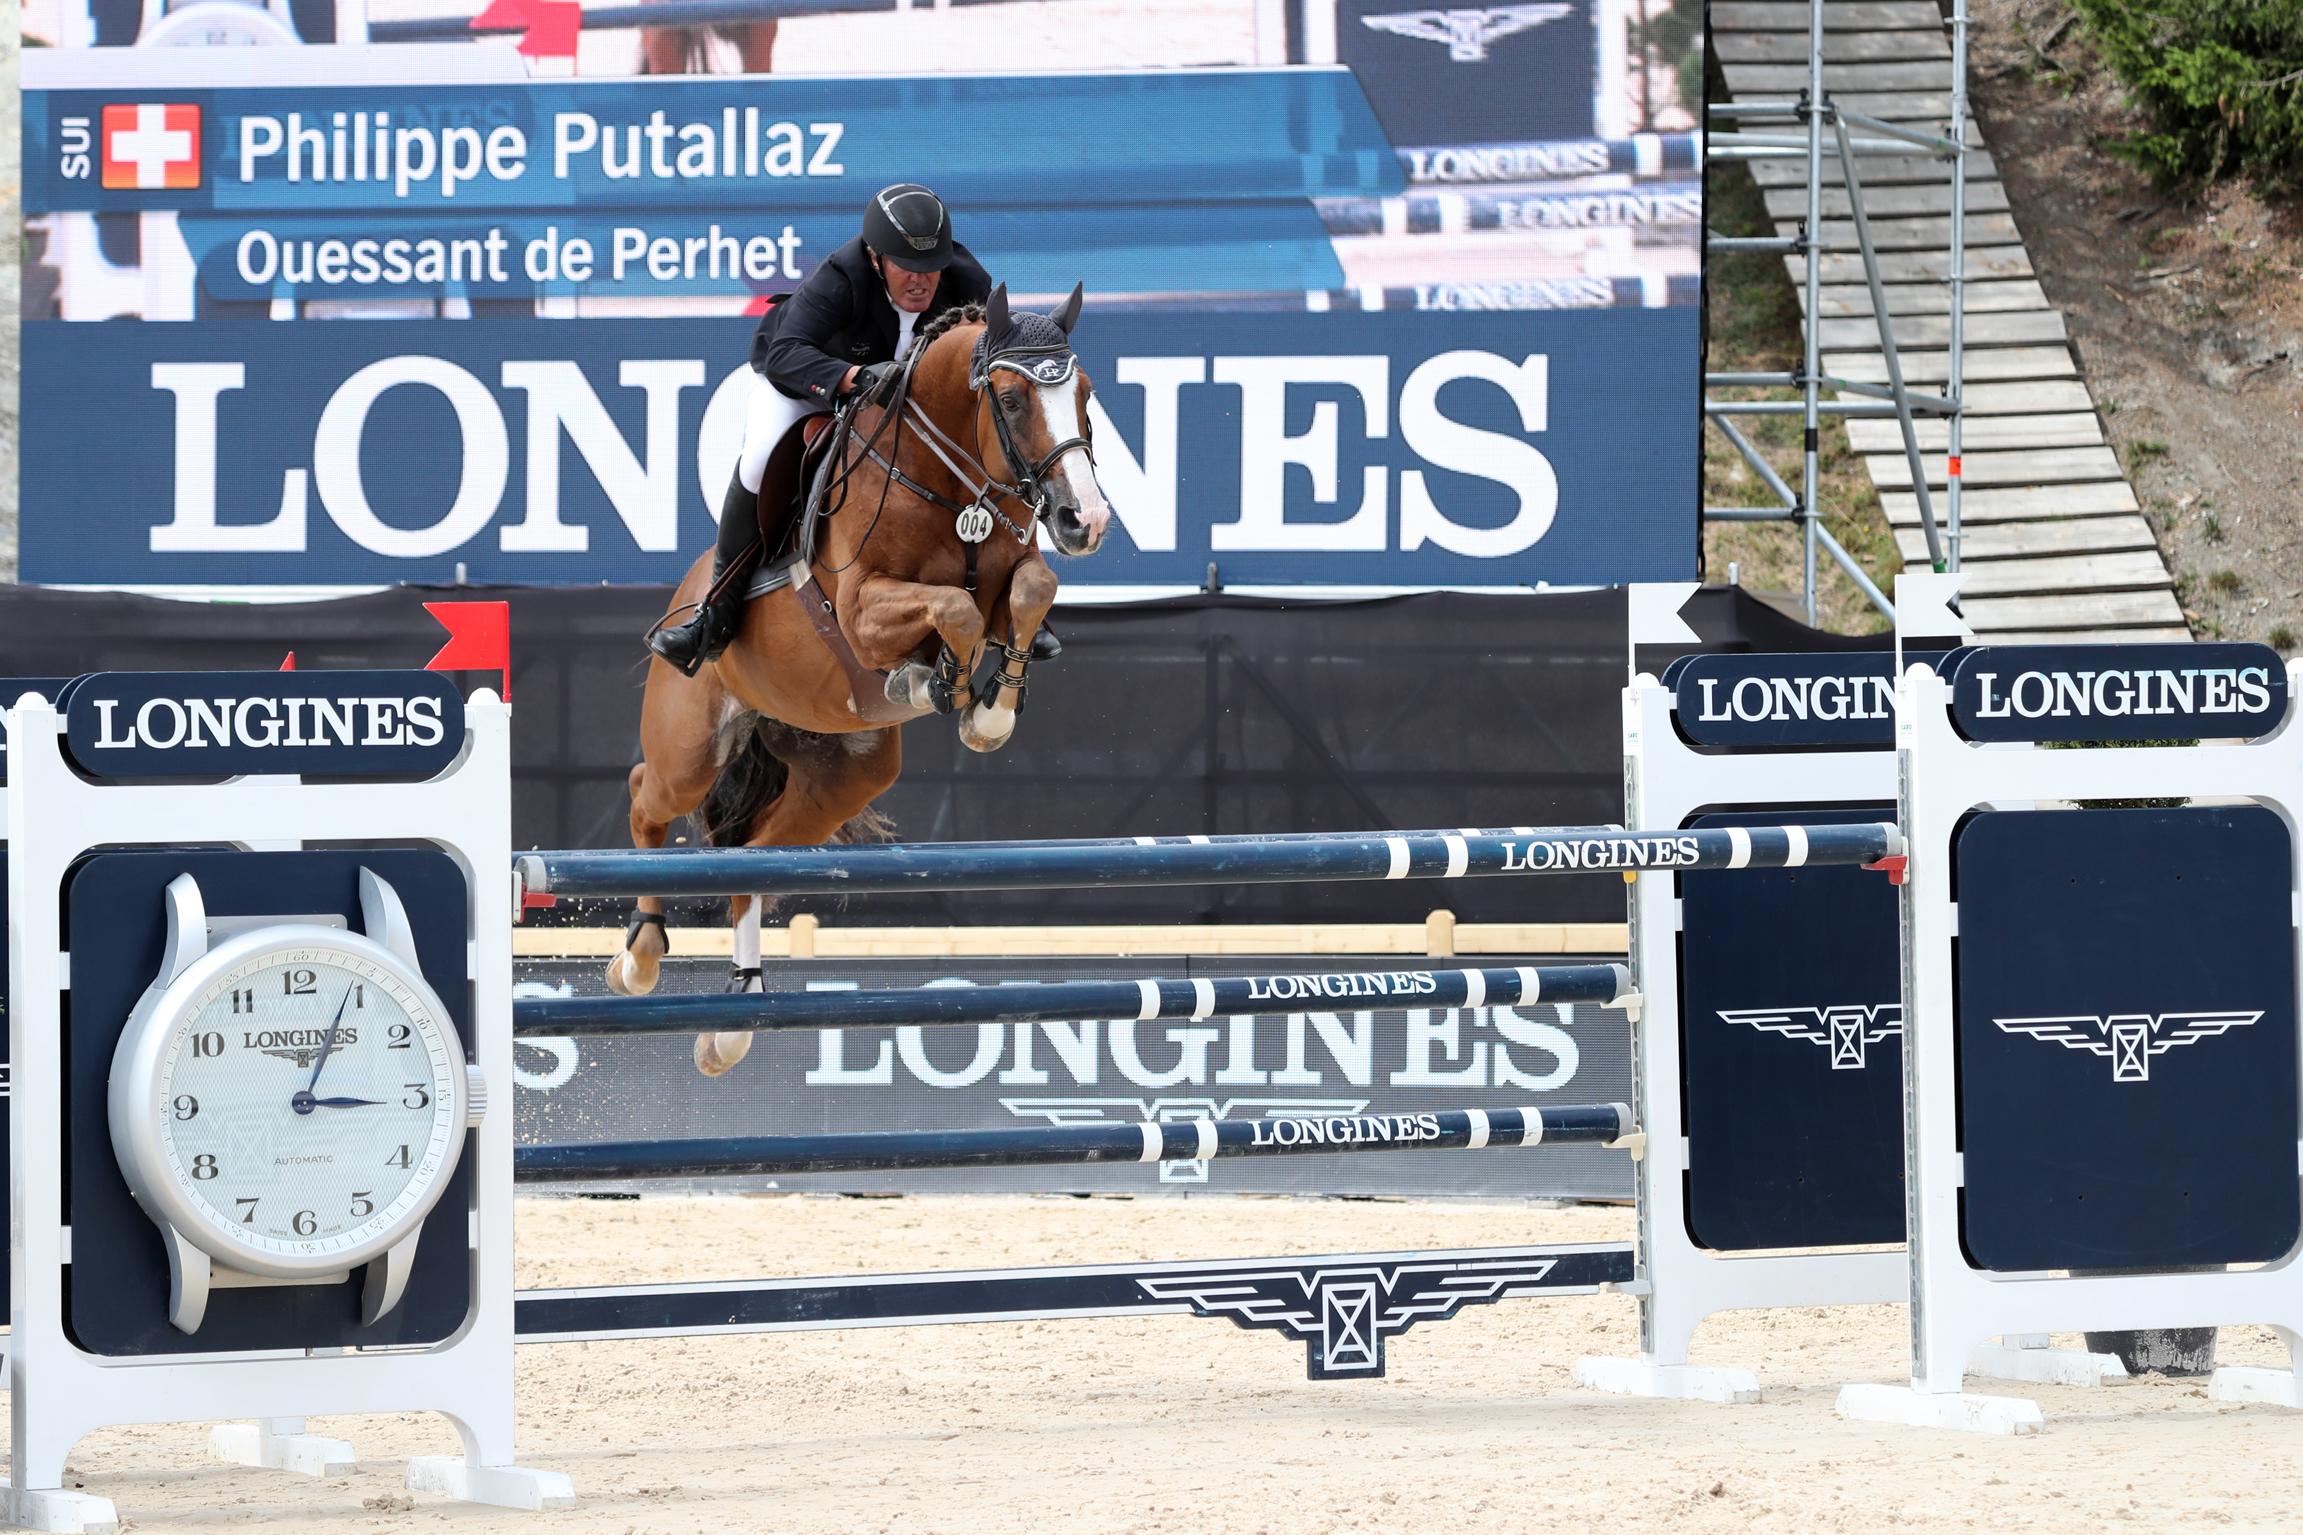 Jumping Longines Crans Montana 2016 Philippe Putallaz, vincitore